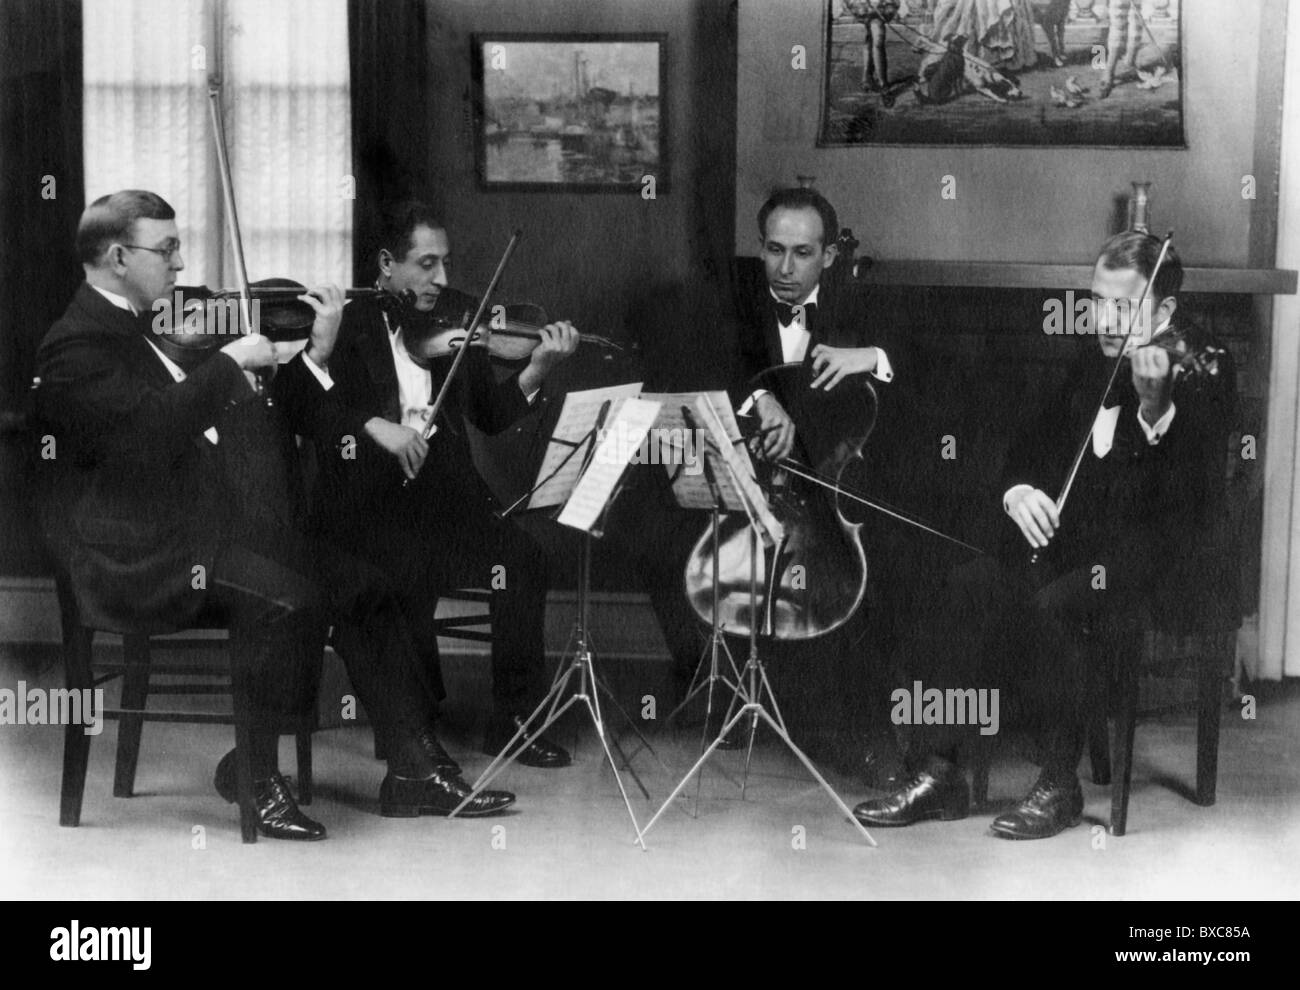 Musik, Musikgruppe, Ensemble, Streichquartett, 1920er Jahre, zusätzliche-Rechte-Clearenzen-nicht verfügbar Stockfoto